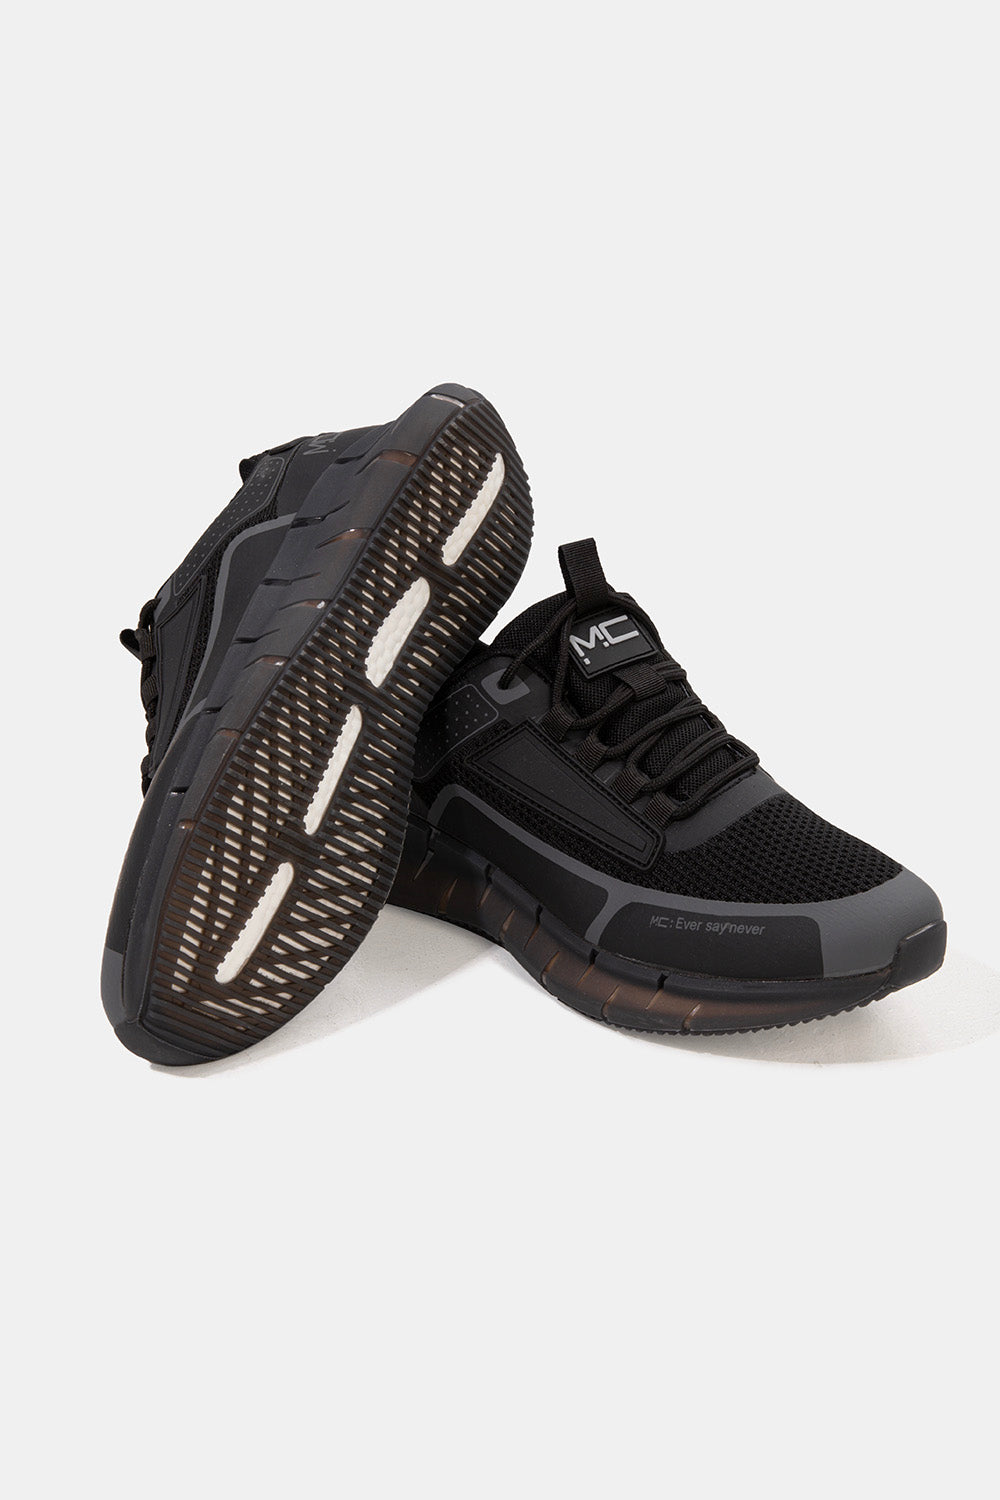 black running shoes